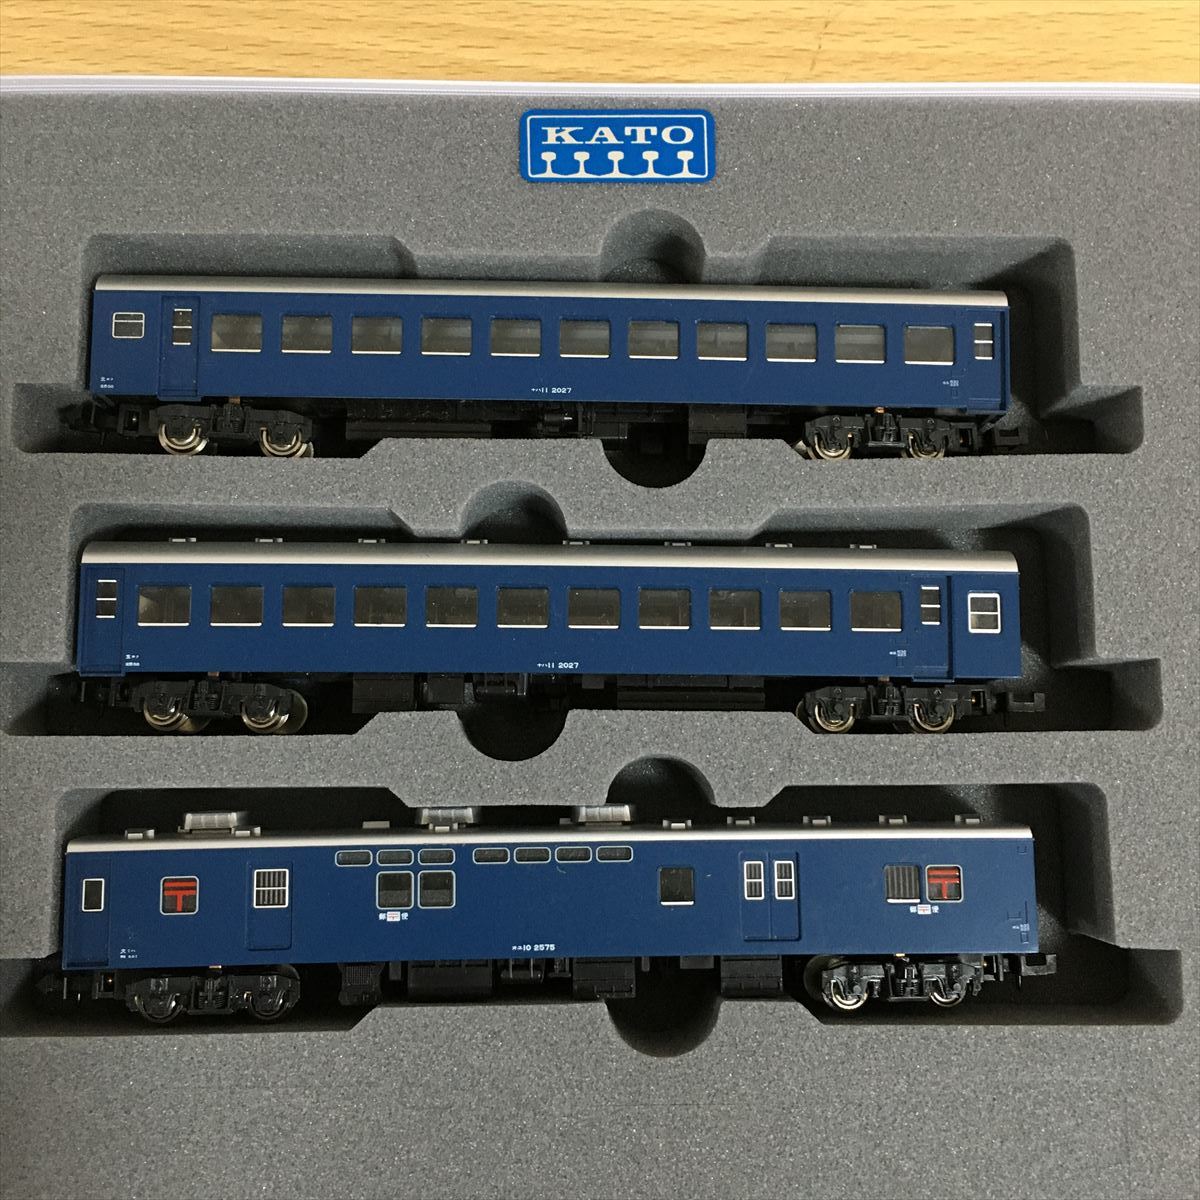 KATO カトー PRECISION RAILROAD MODELS 車両ケース + ナハ11 2027 2両 + オユ10 2575 1両 (計3両セット) 客車 模型 鉄道模型 12 カ 6343_画像2